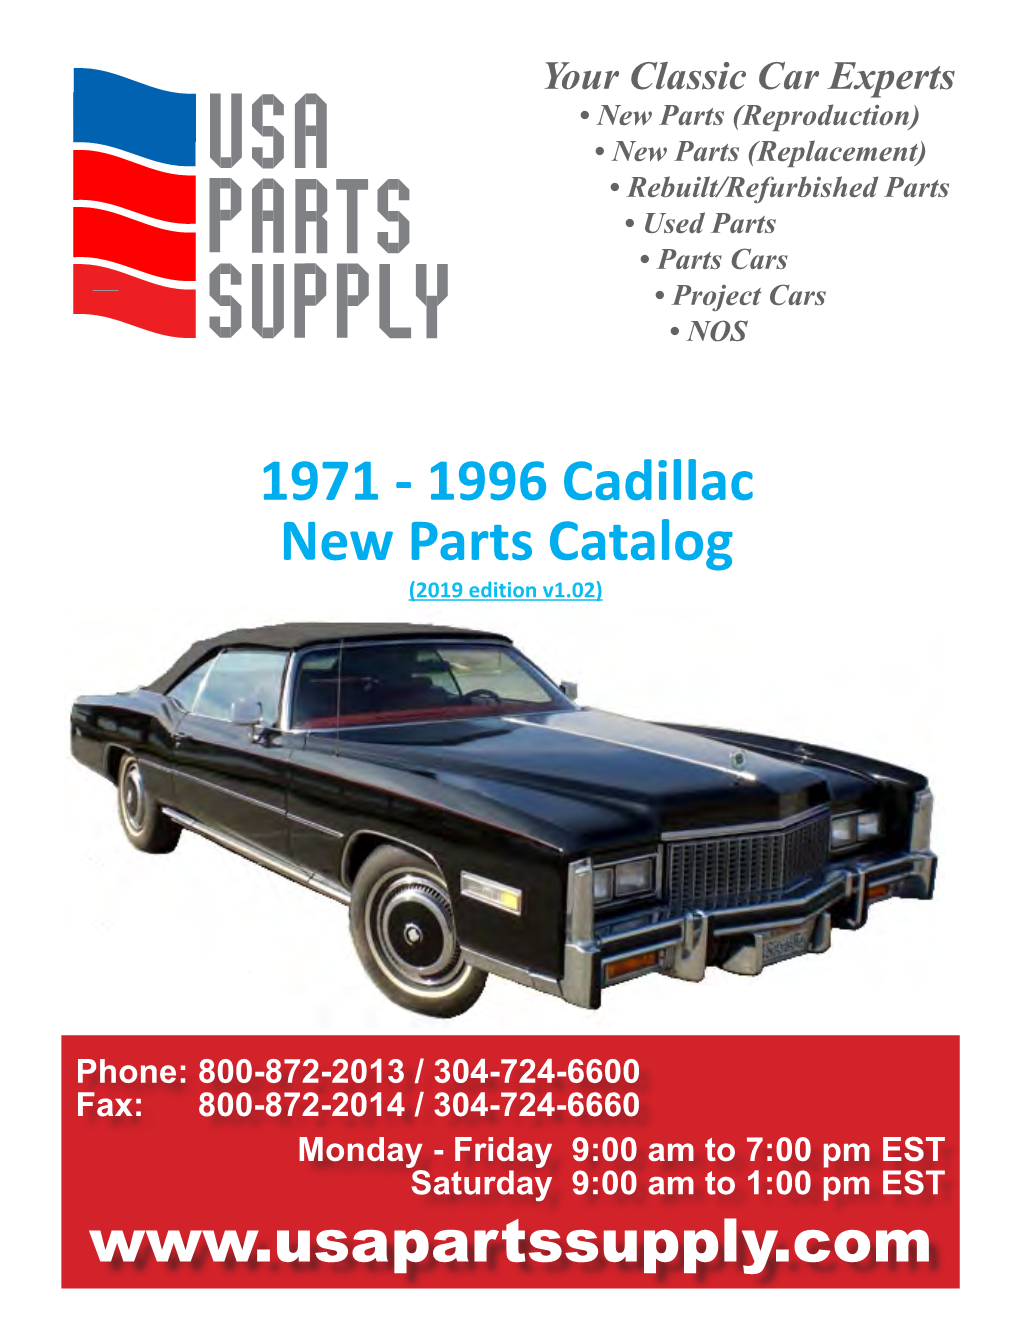 Cadillac New Parts Catalog (2019 Edition V1.02)